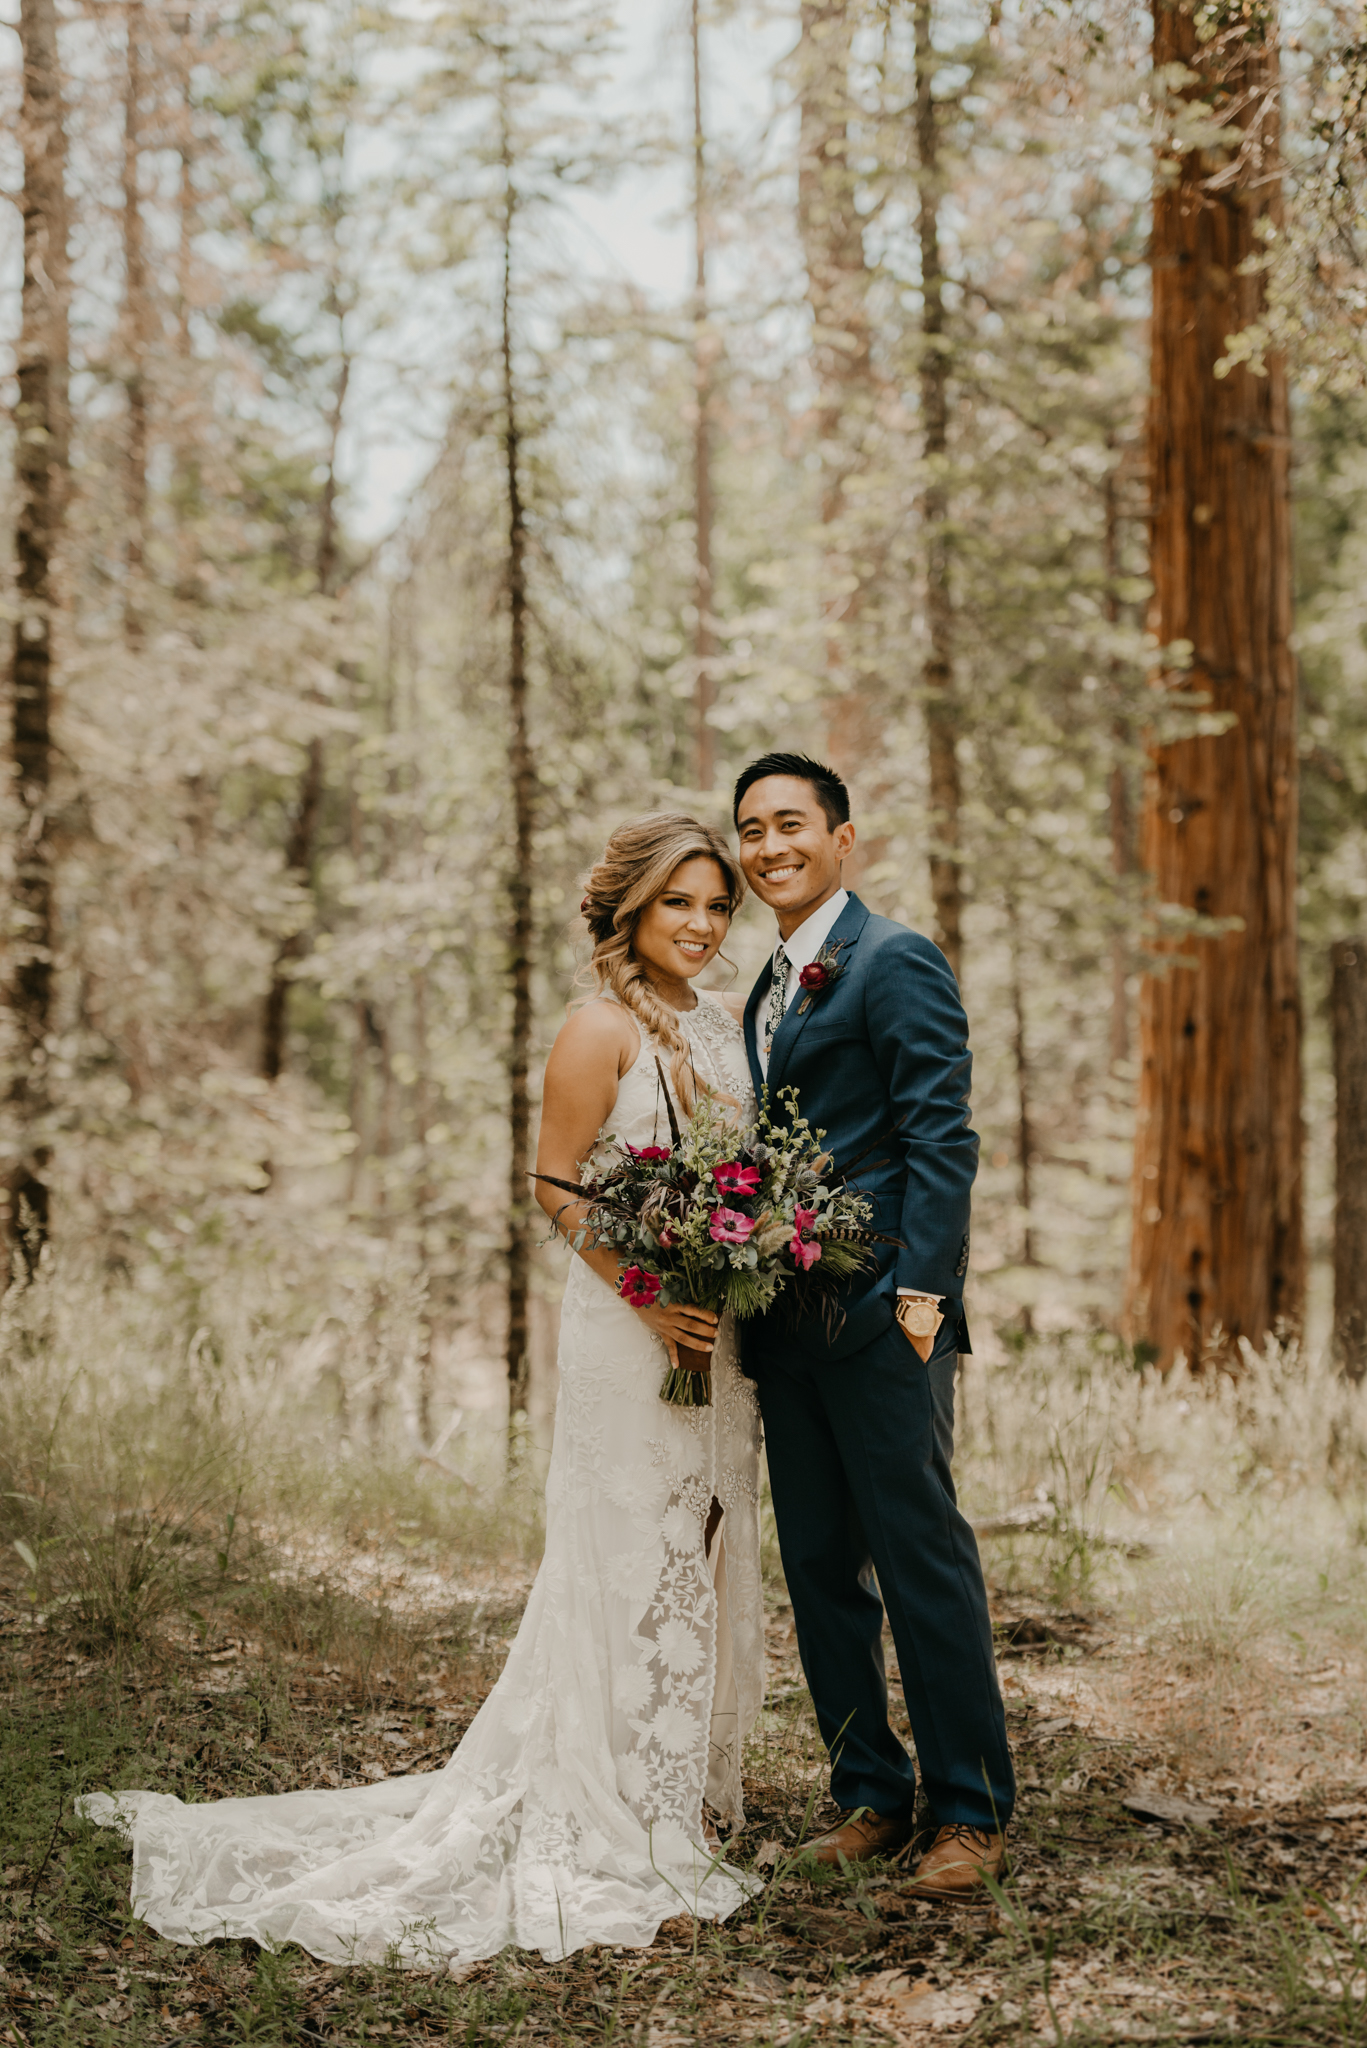 © Isaiah + Taylor Photography - Evergreen Lodge Destination Yoesmite Wedding - Los Angeles Wedding Photographer-076.jpg